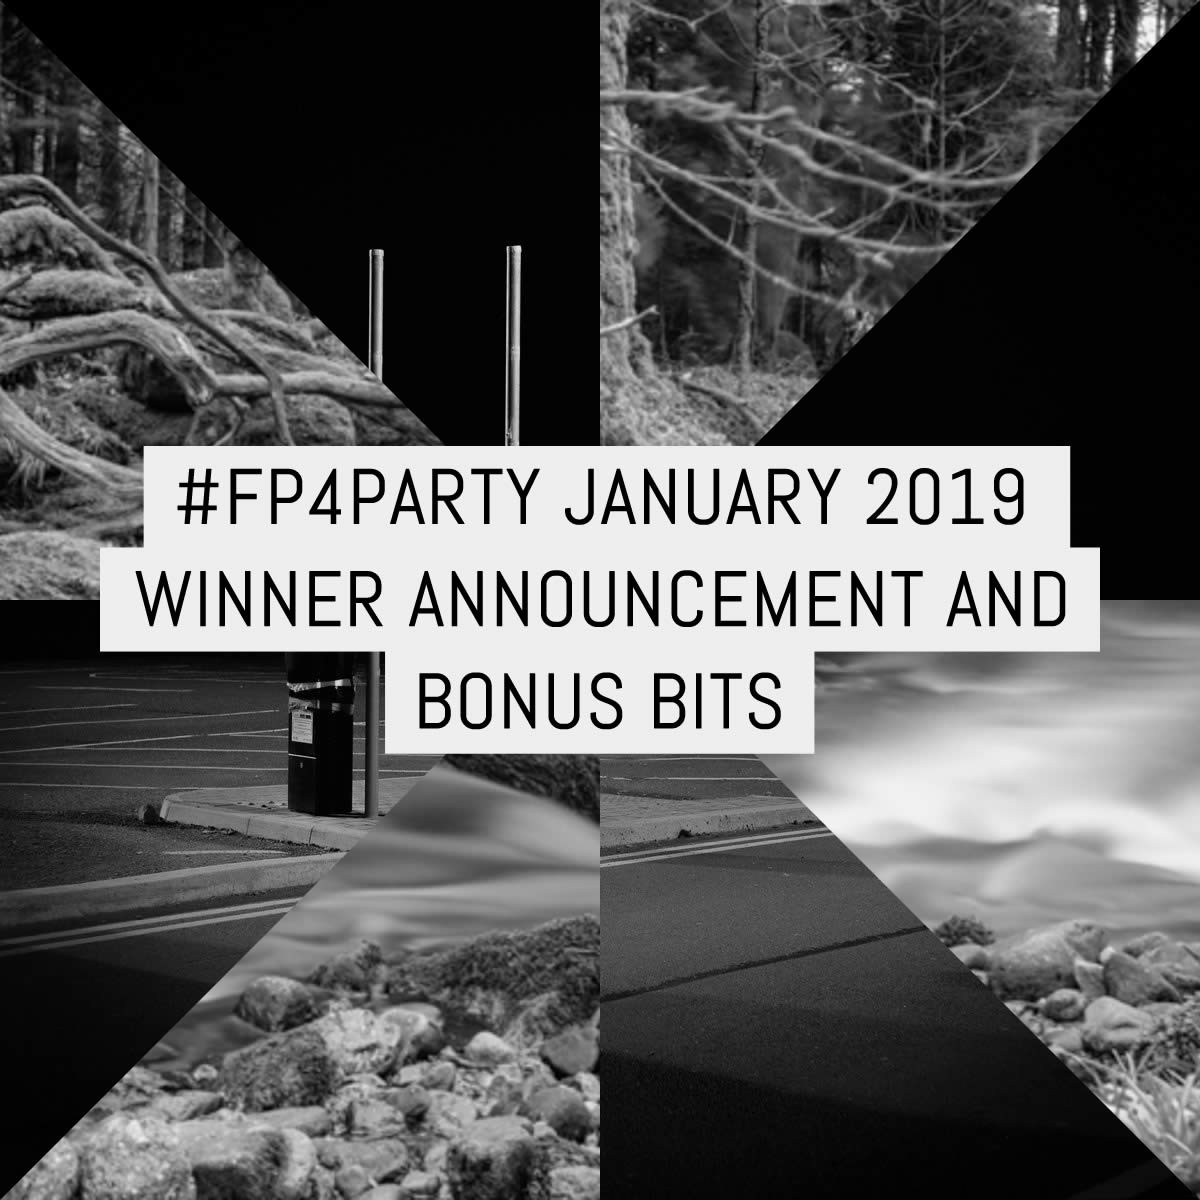 #FP4party January 2019 winner announcement and bonus bits